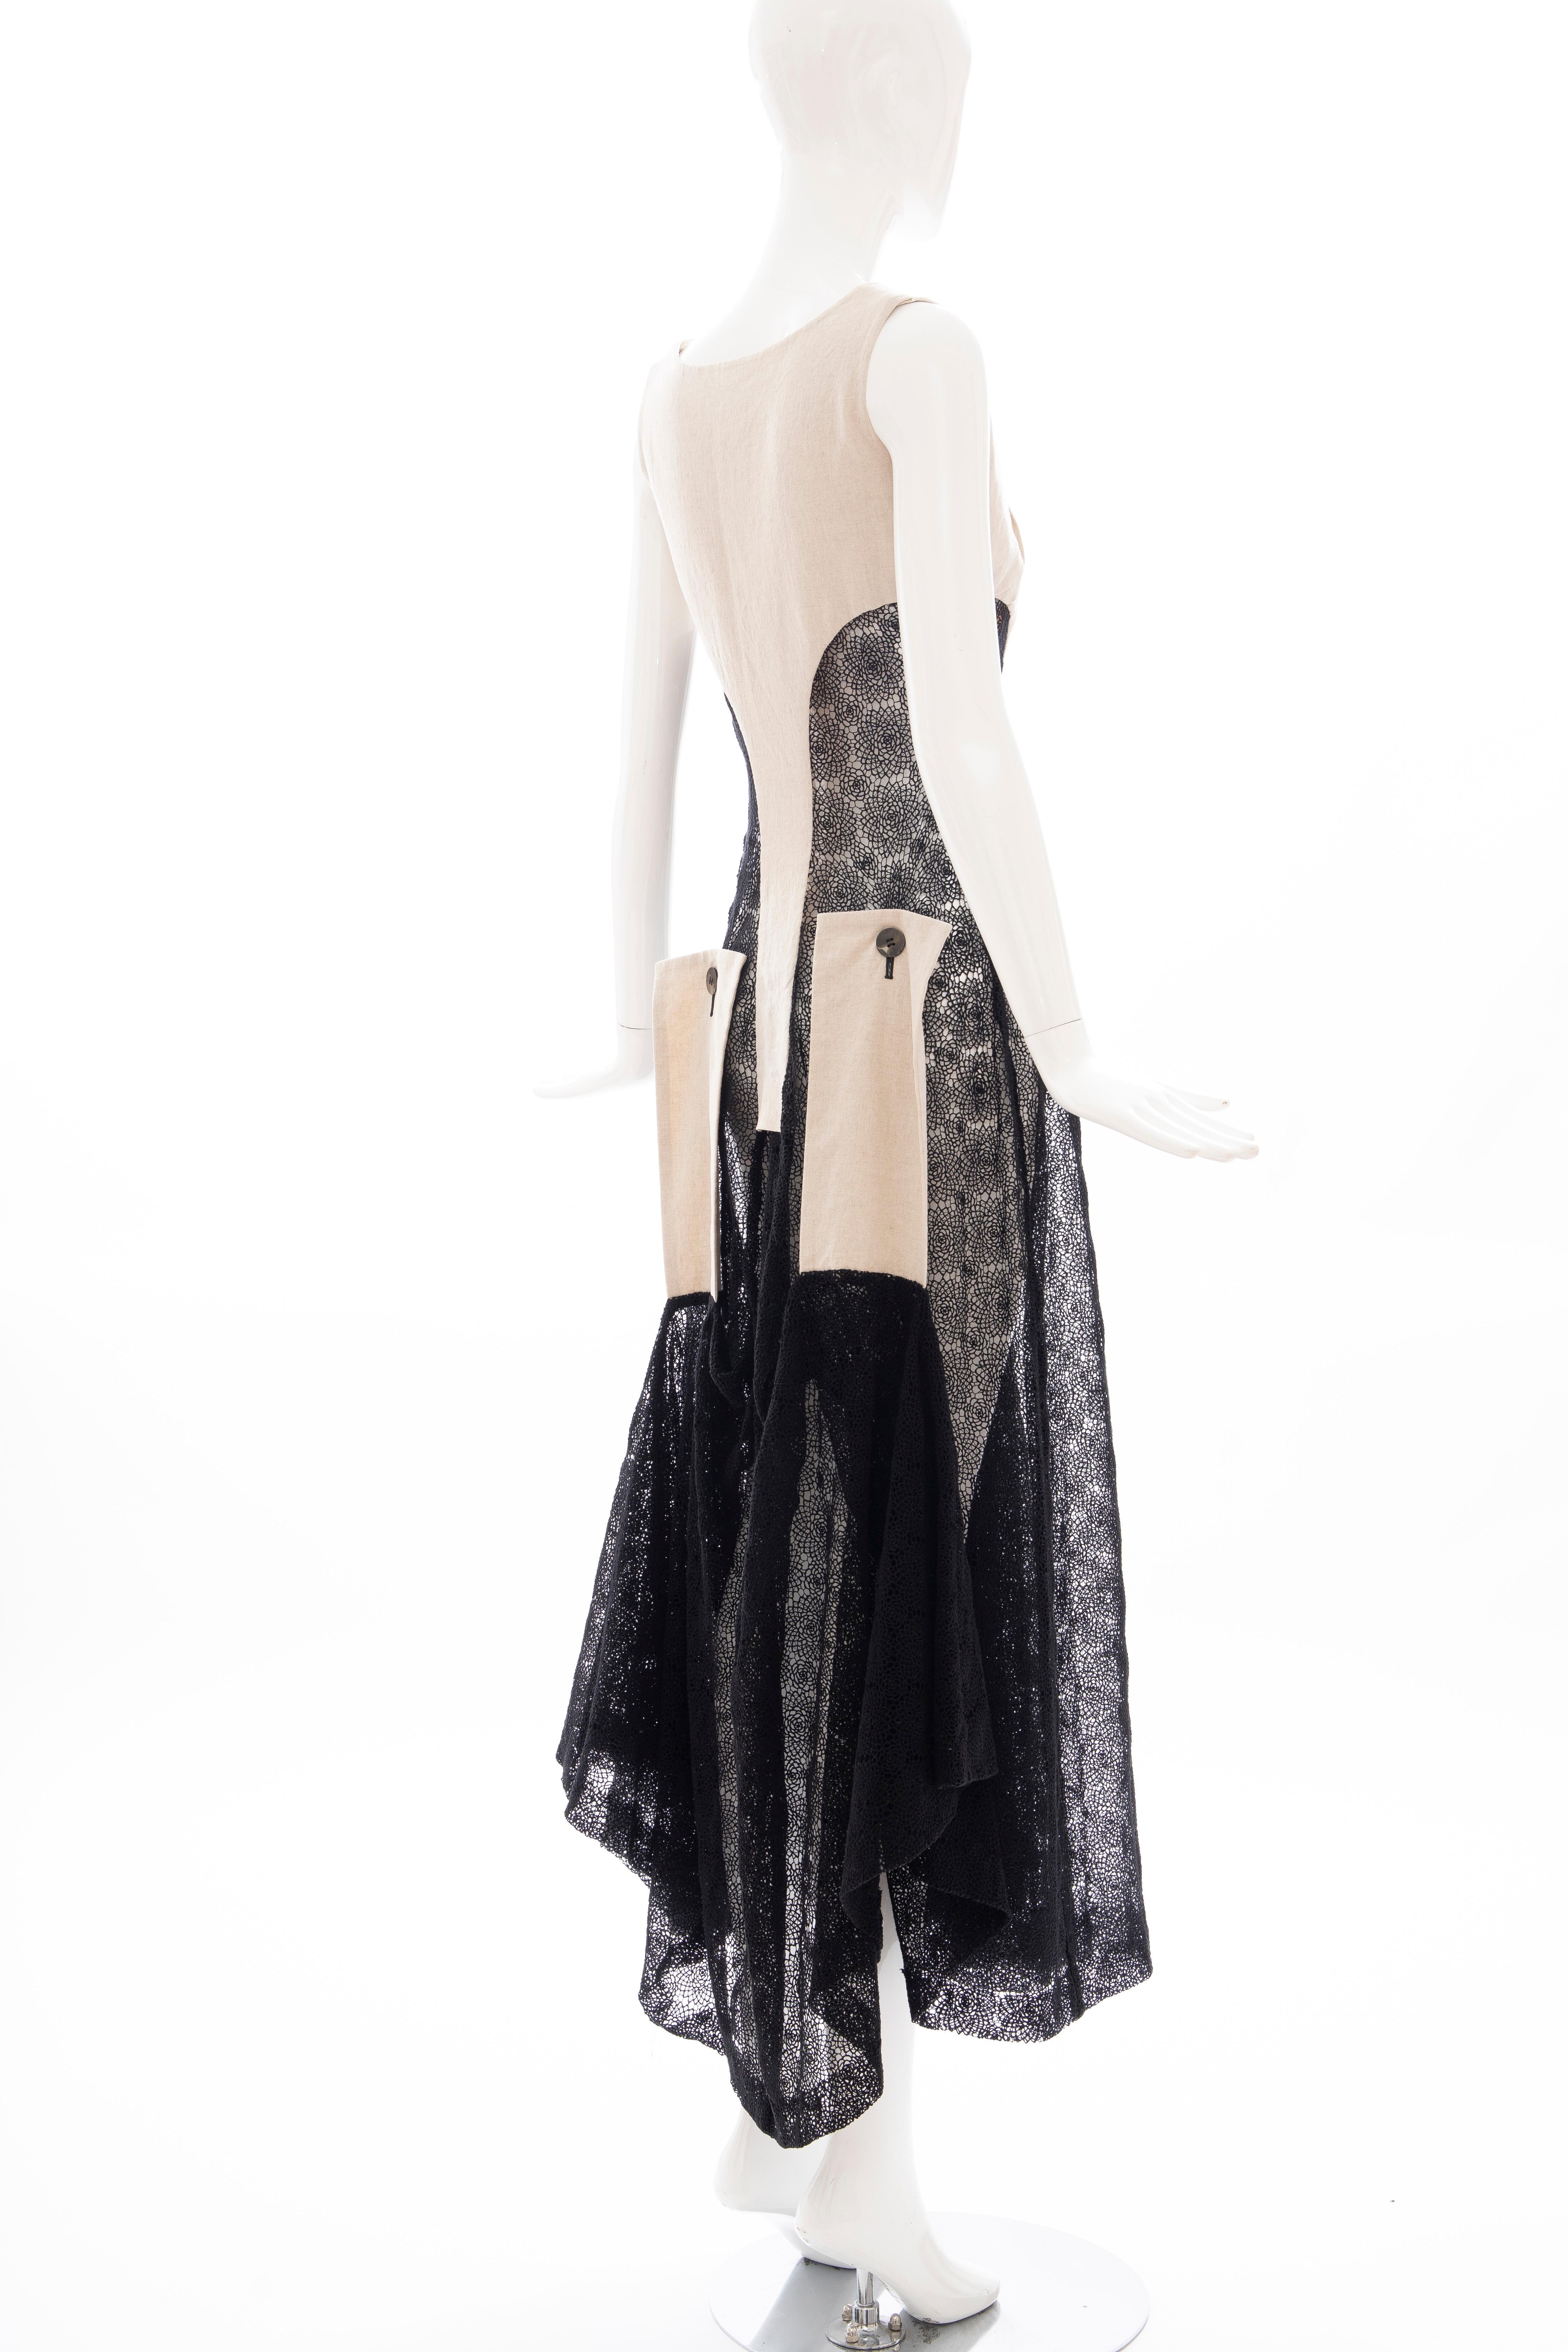 Yohji Yamamoto Runway Black Cotton Lace & Natural Linen Dress, Spring 2005 3